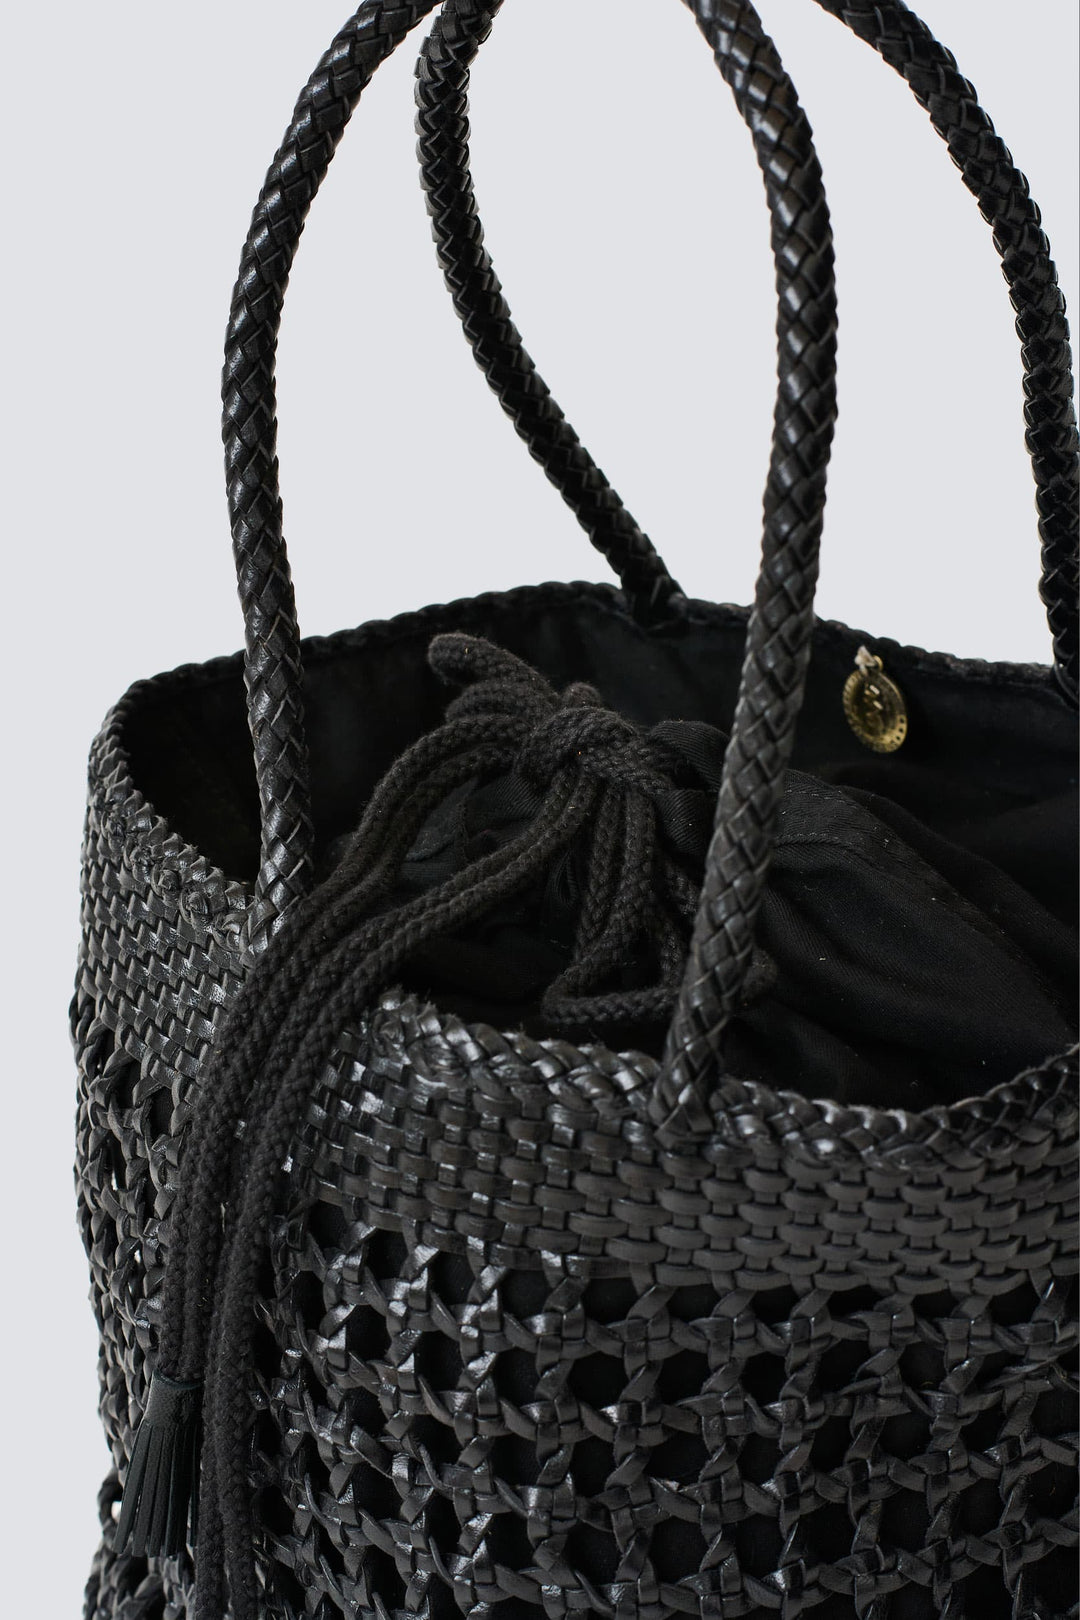 Dragon Diffusion - Big Bucket XXL Tan Woven Leather Bag